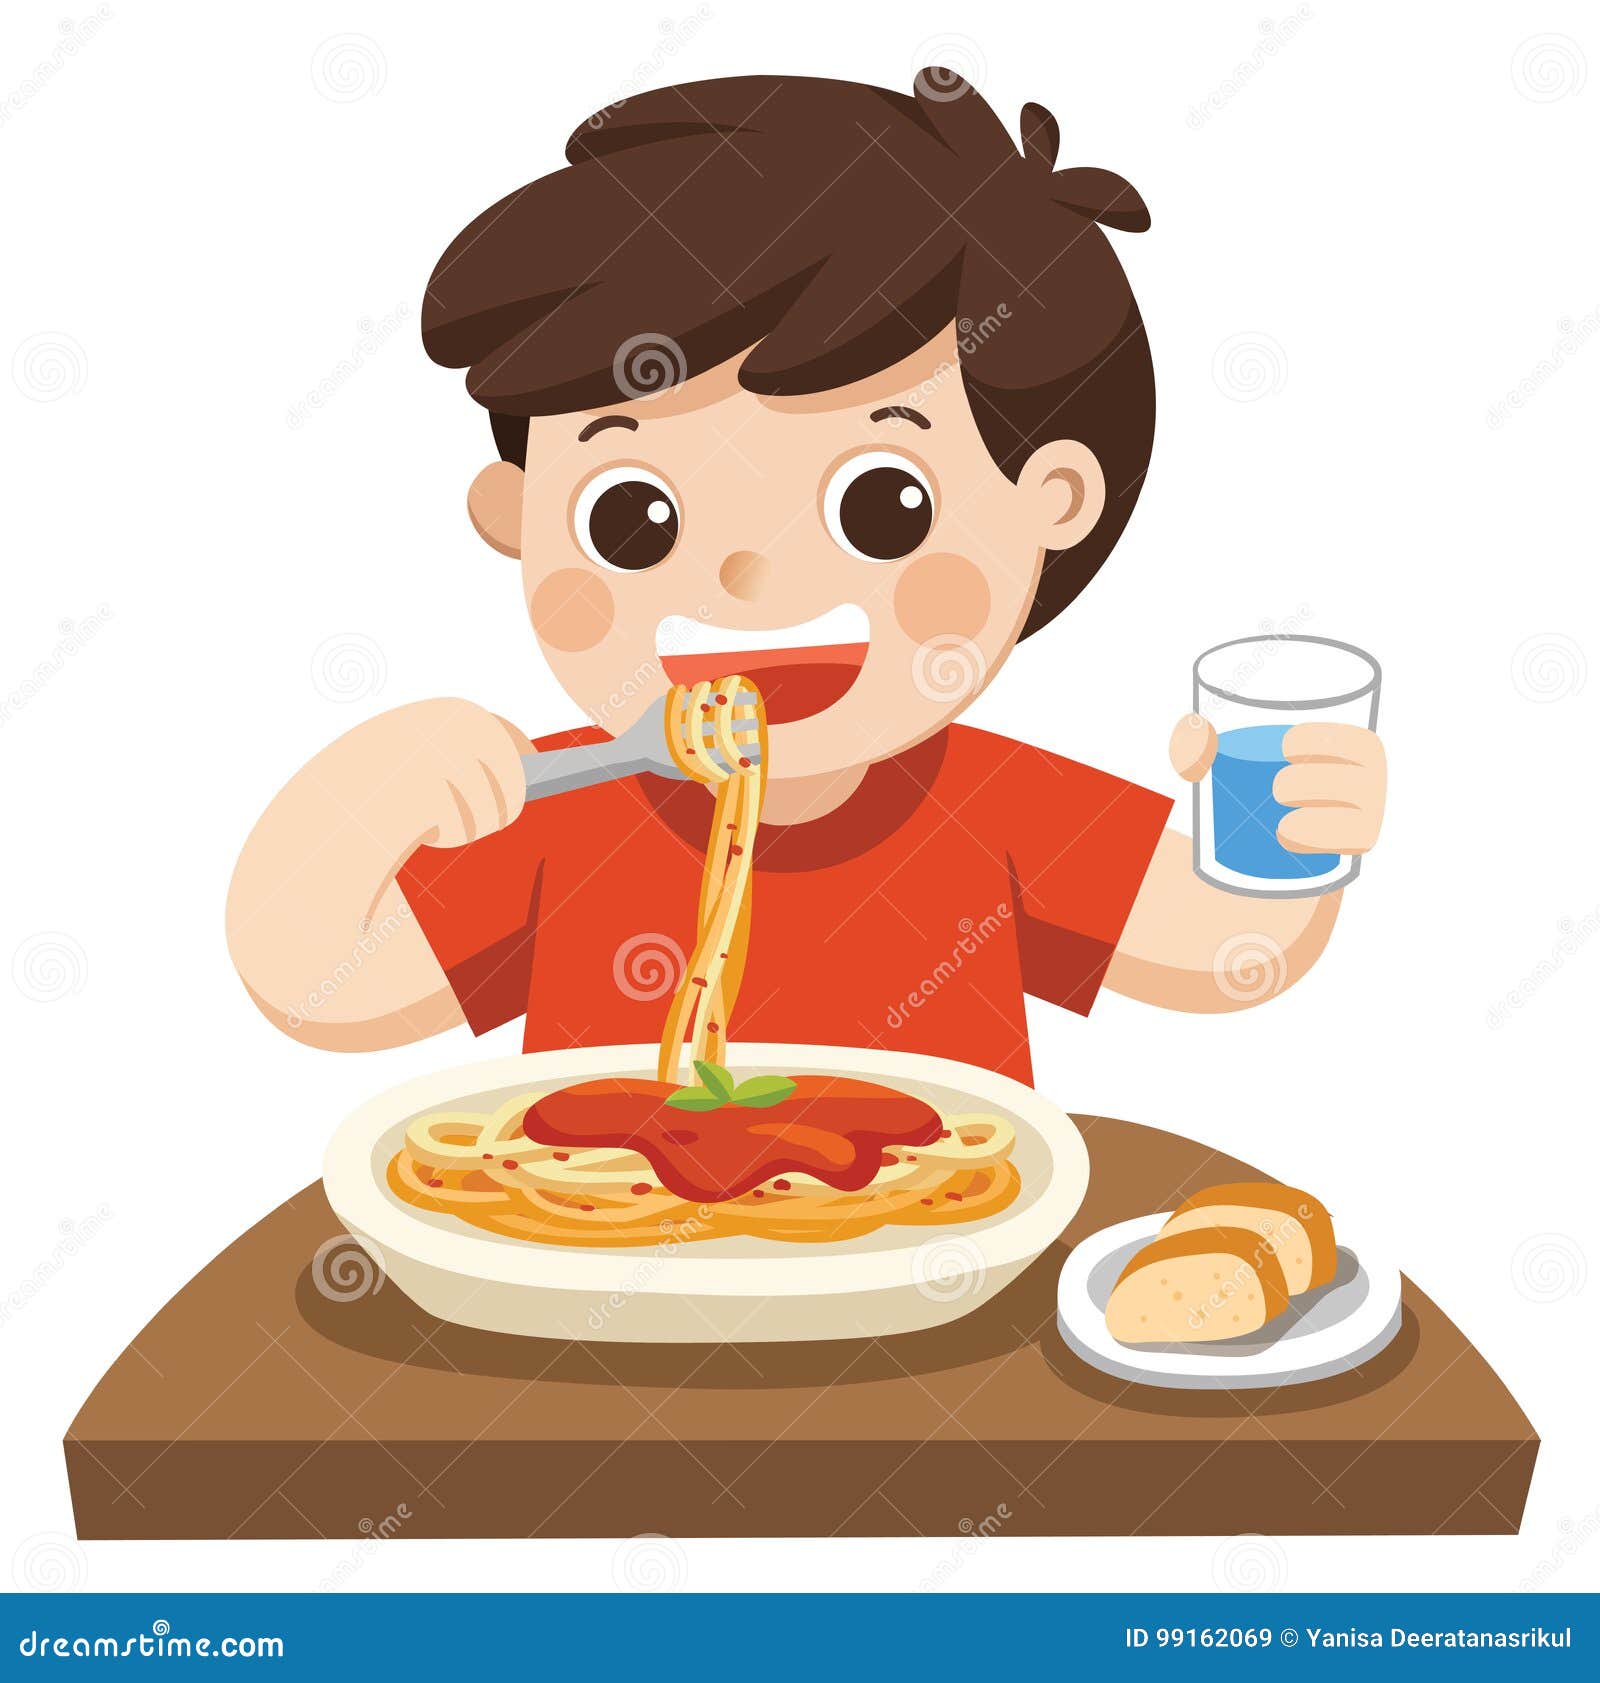 a little boy happy to eat spaghetti.